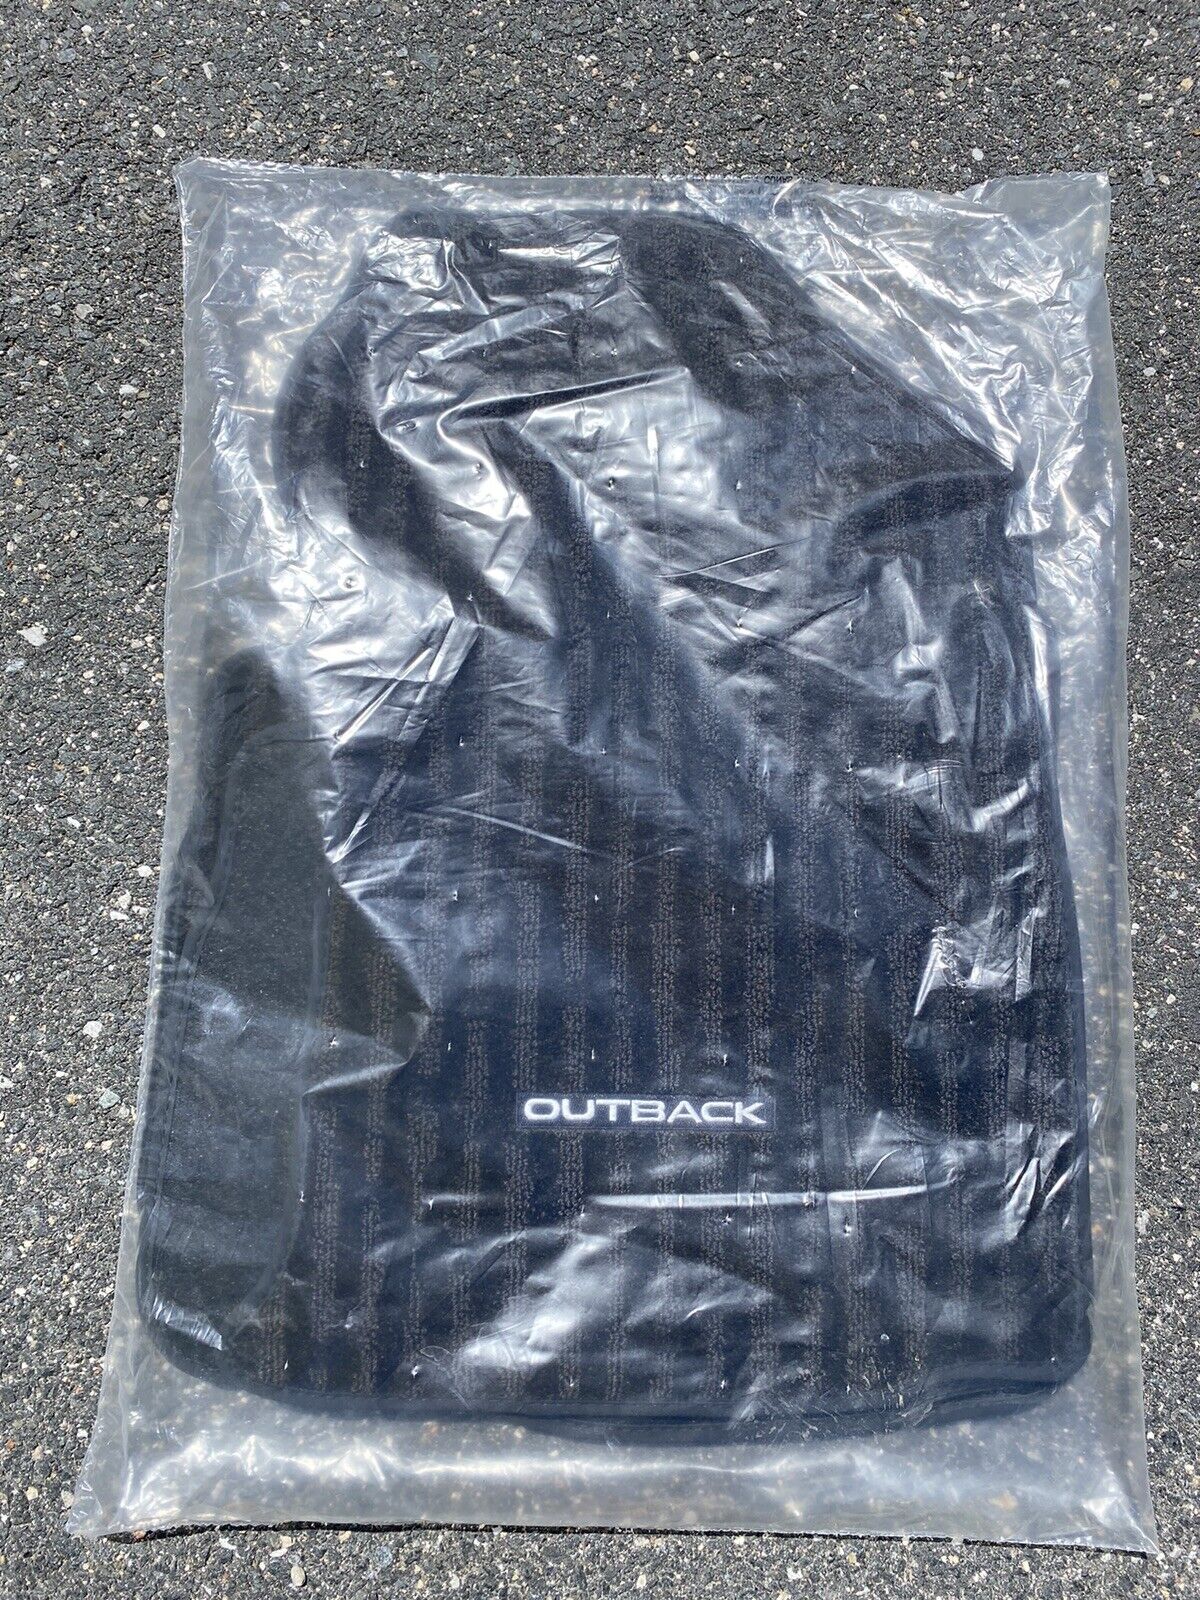 Subaru Outback OEM carpeted black floor mats set 4 J501SAN000 new in bag 2020